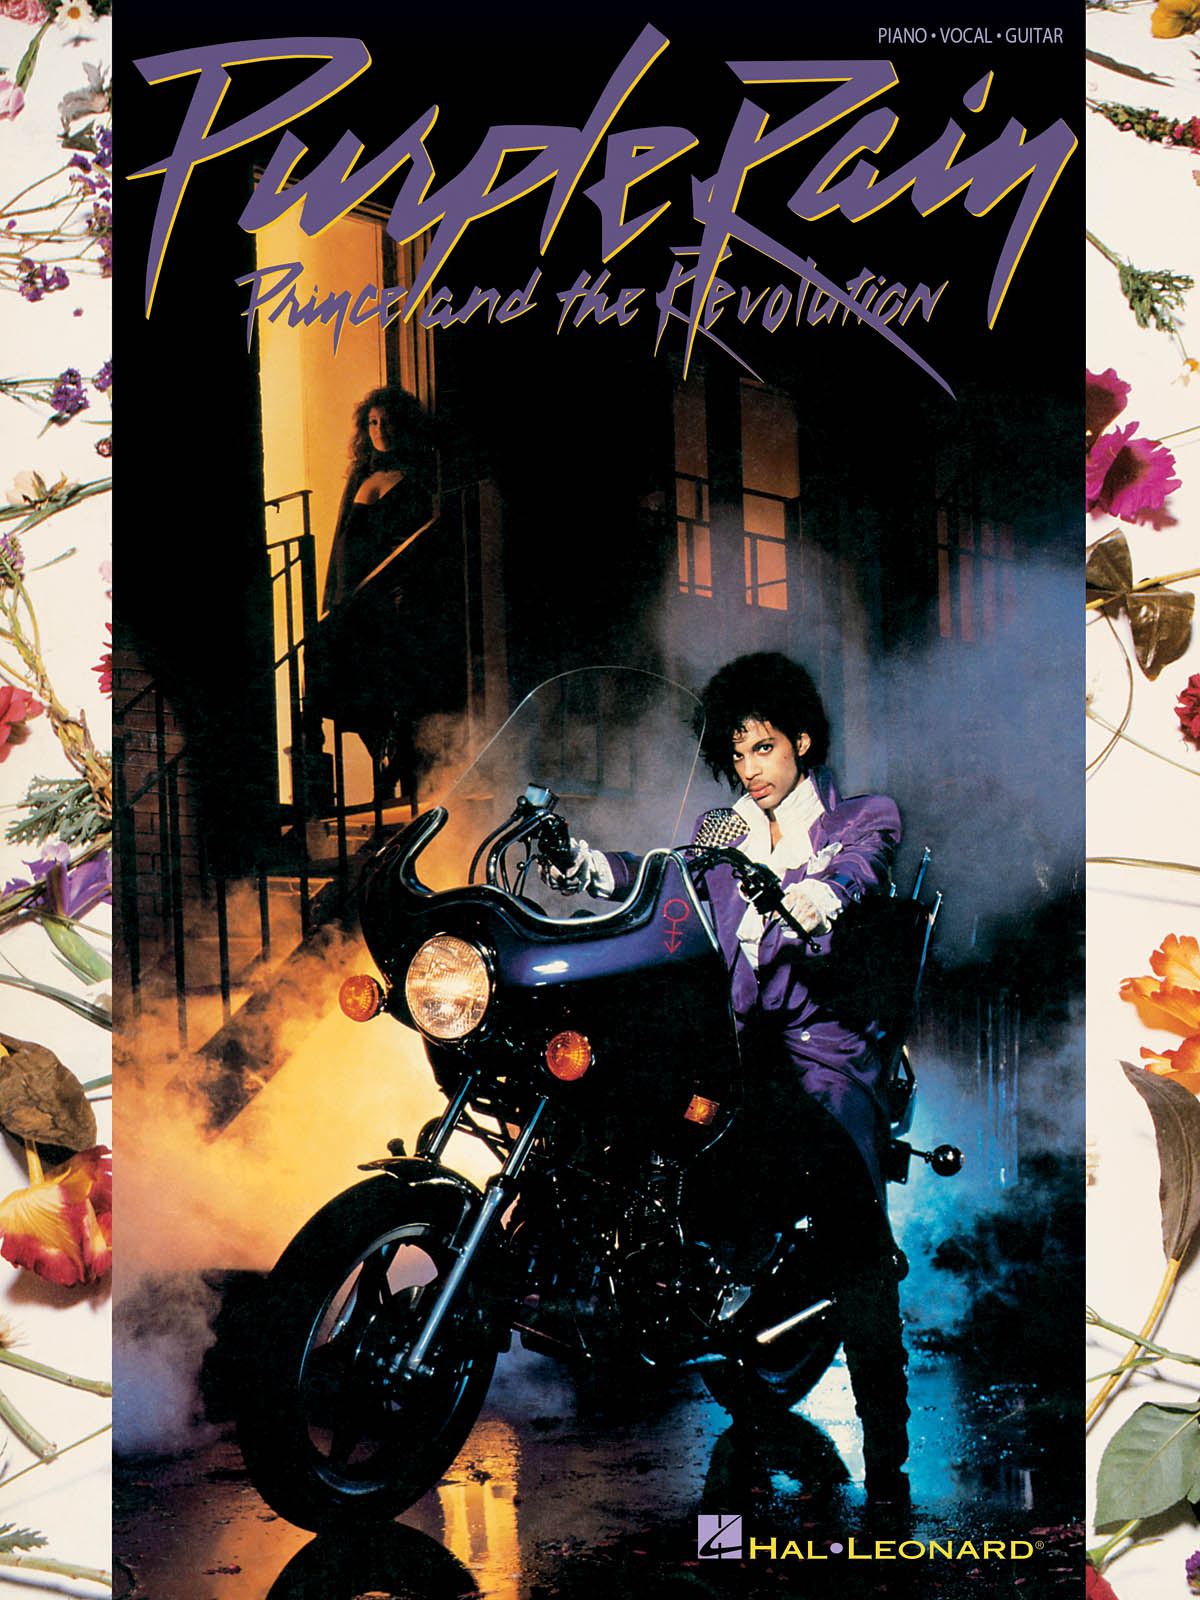 Prince: Prince - Purple Rain: Piano  Vocal and Guitar: Album Songbook